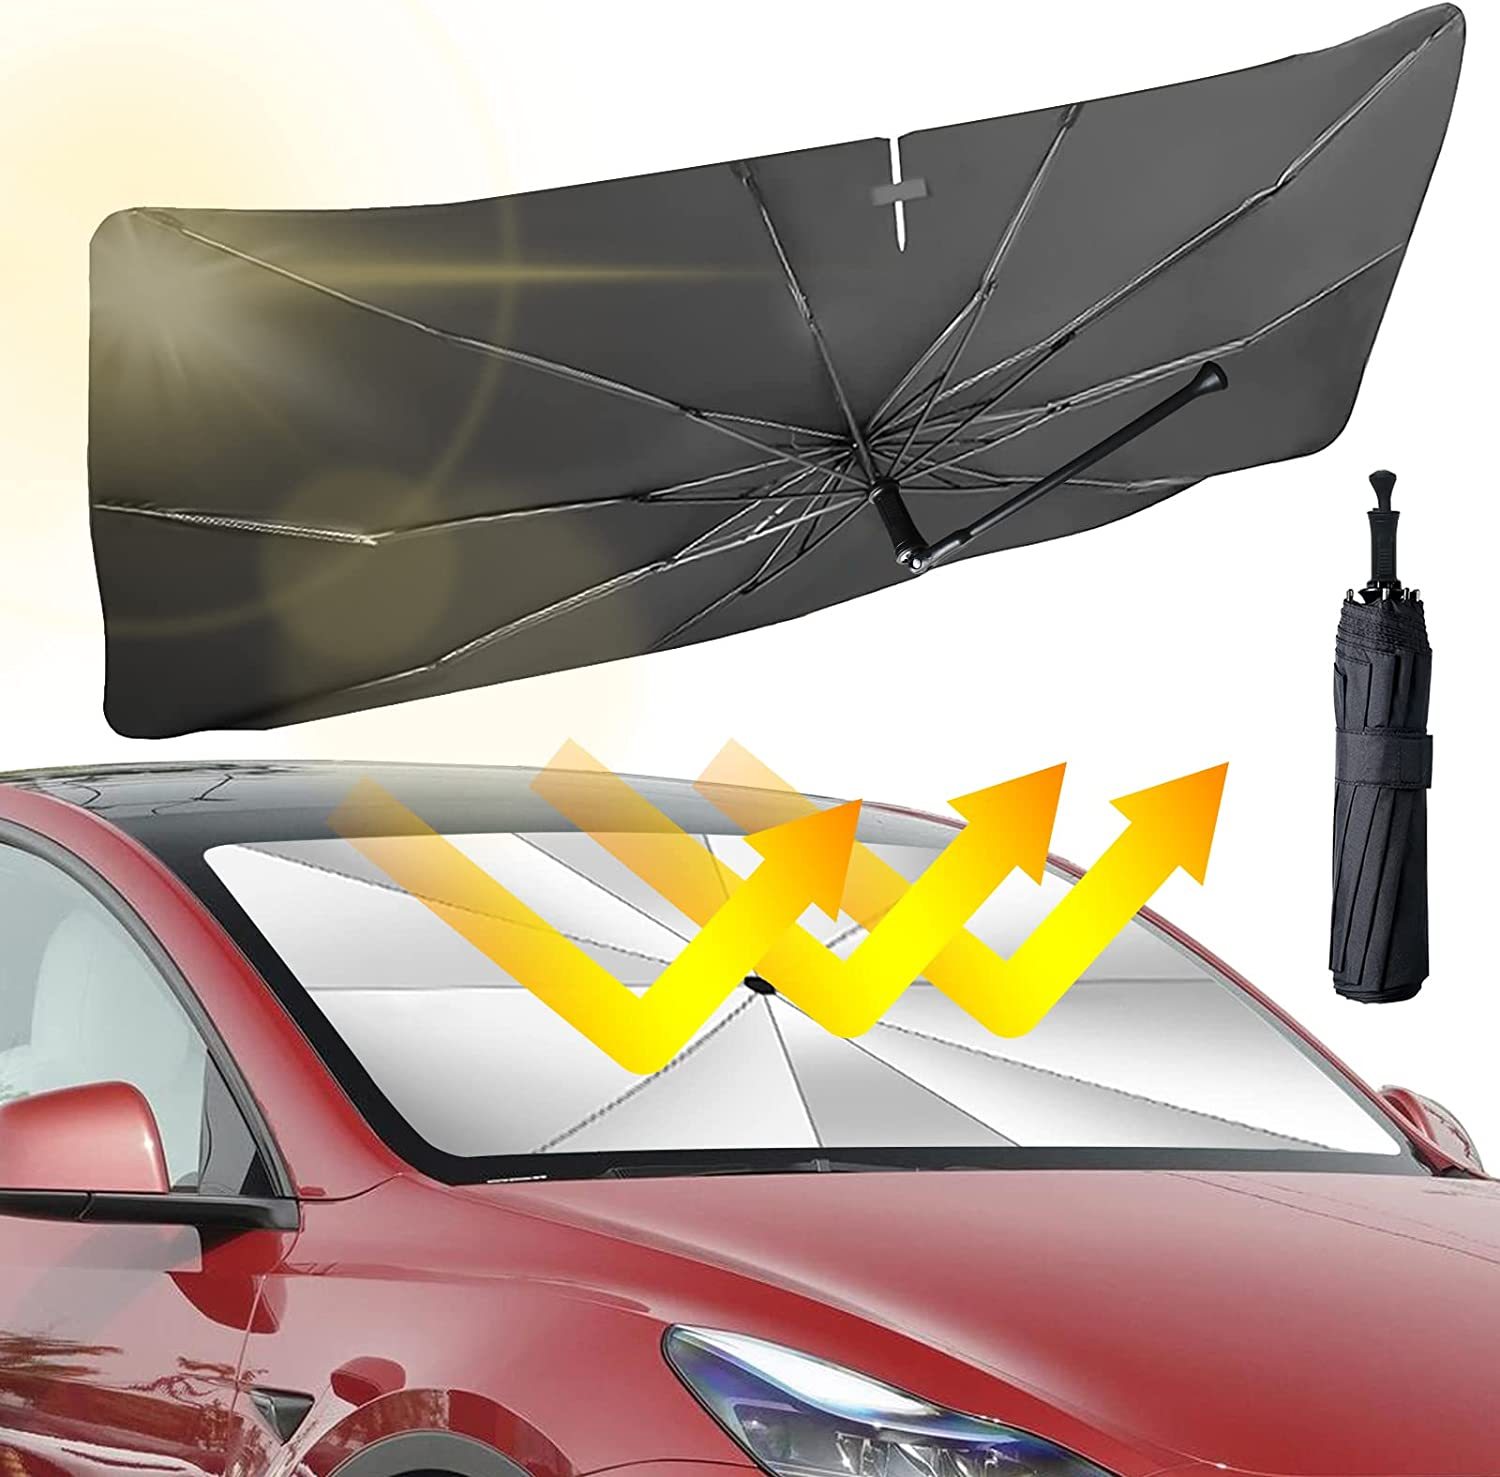 Car Windshield Sun Shade Umbrella - Foldable Car Umbrella Sunshade Cover UV Block Car Front Window (Heat Insulation Protection)